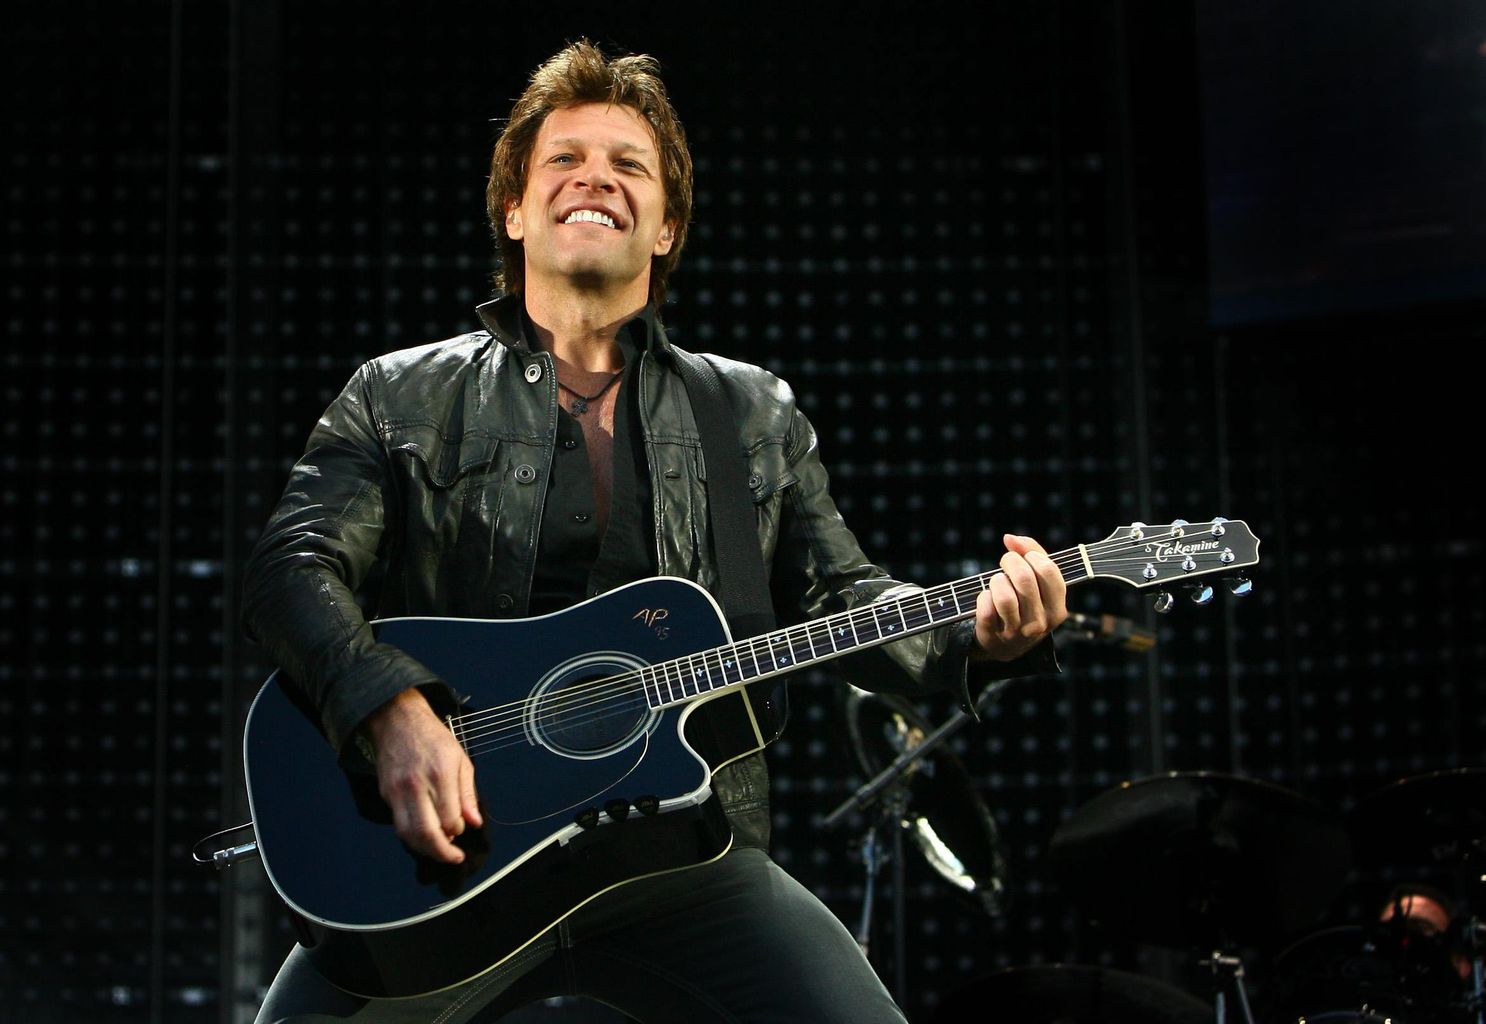 Bon Jovi career